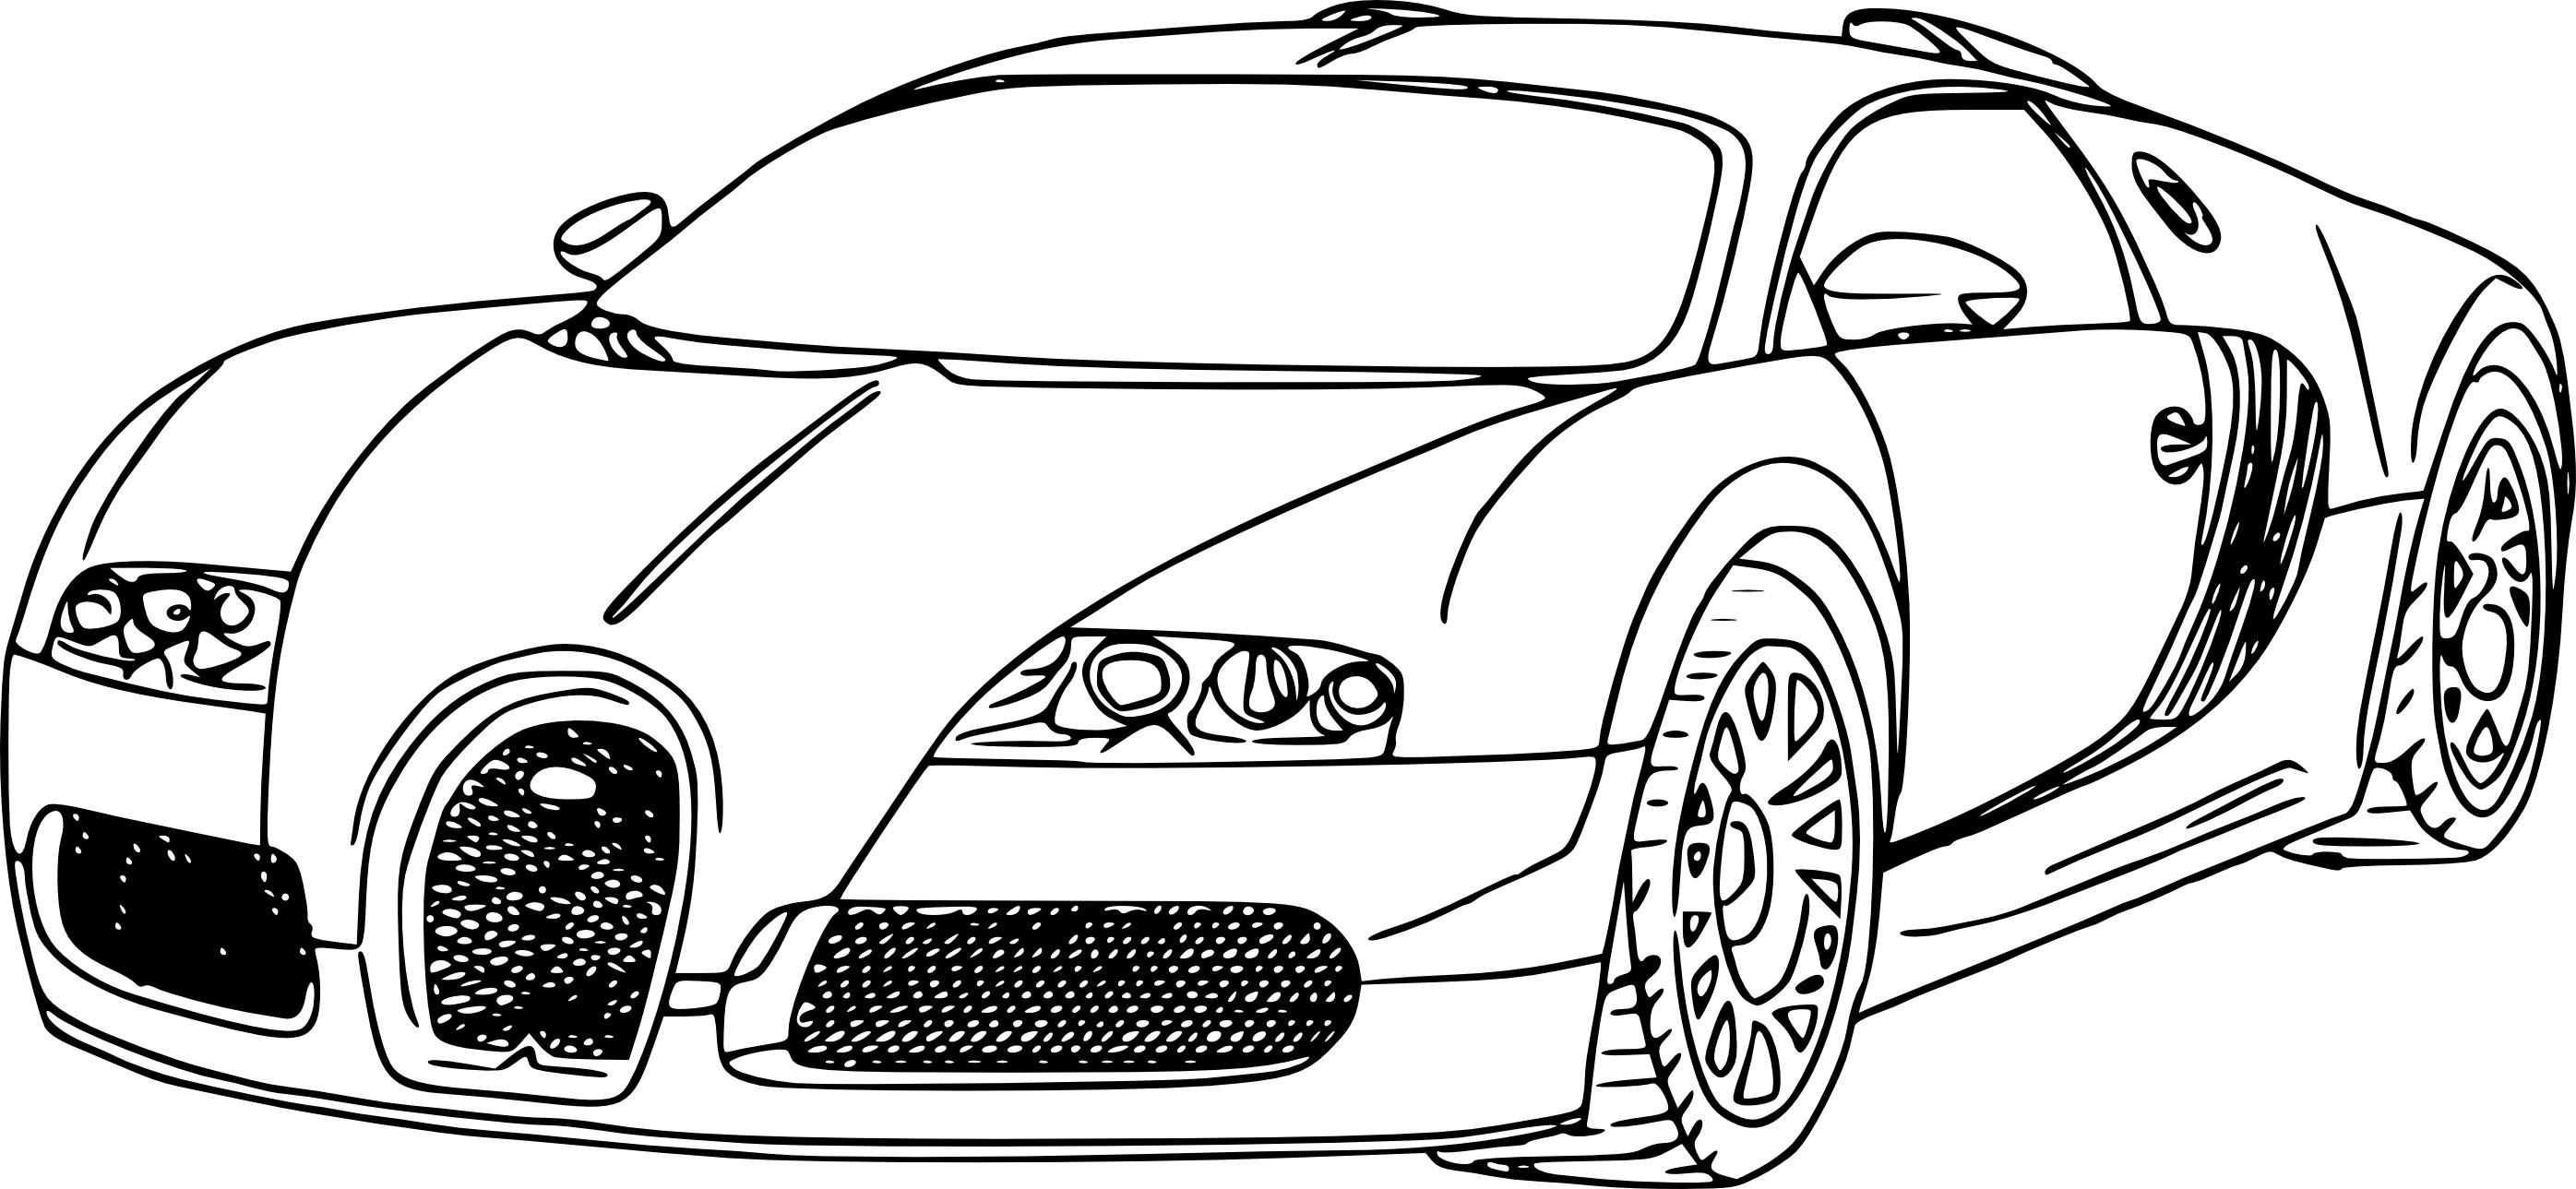 Printable Bugatti Chiron Coloring Page (Page 1) - Line.17QQ.com